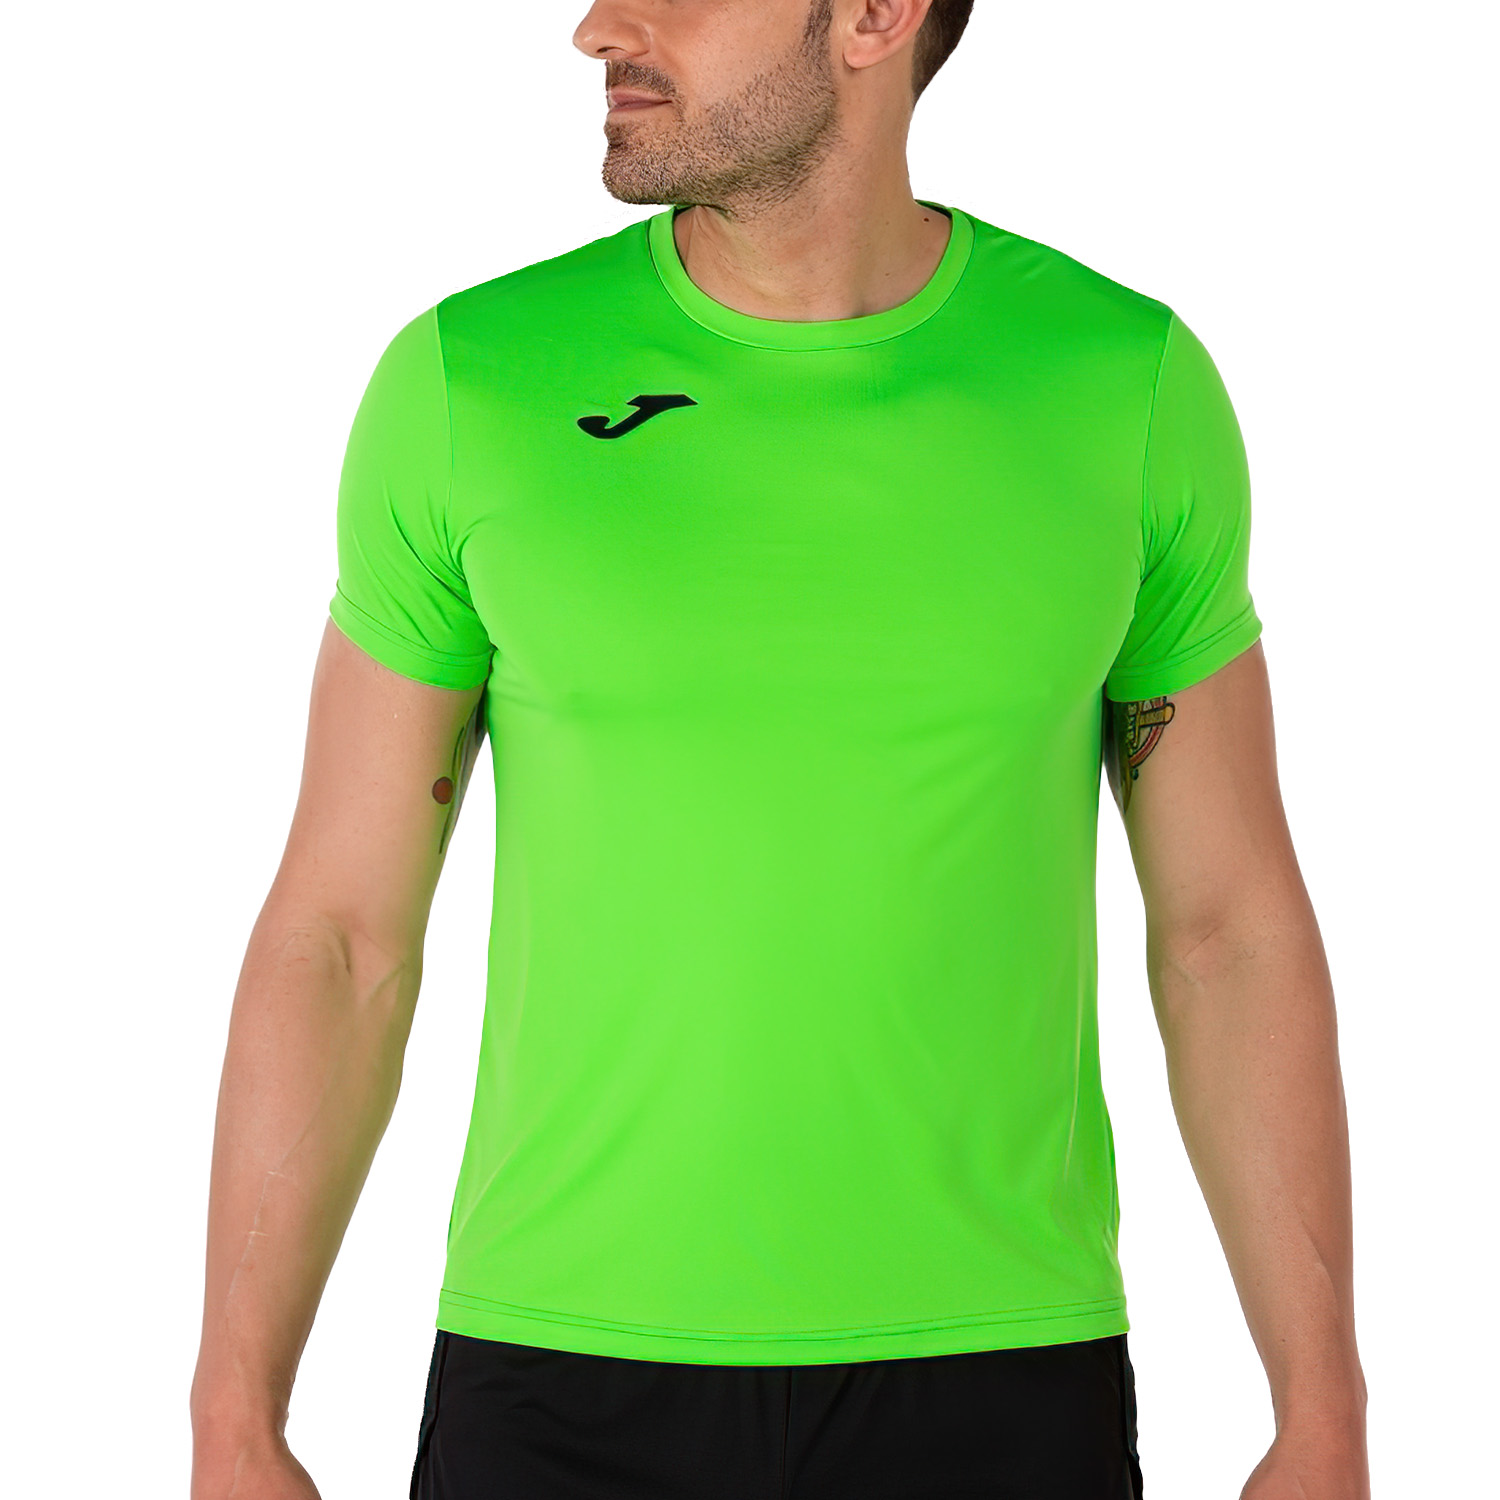 Joma Championship V Camiseta de Tenis Niño - Green Fluor